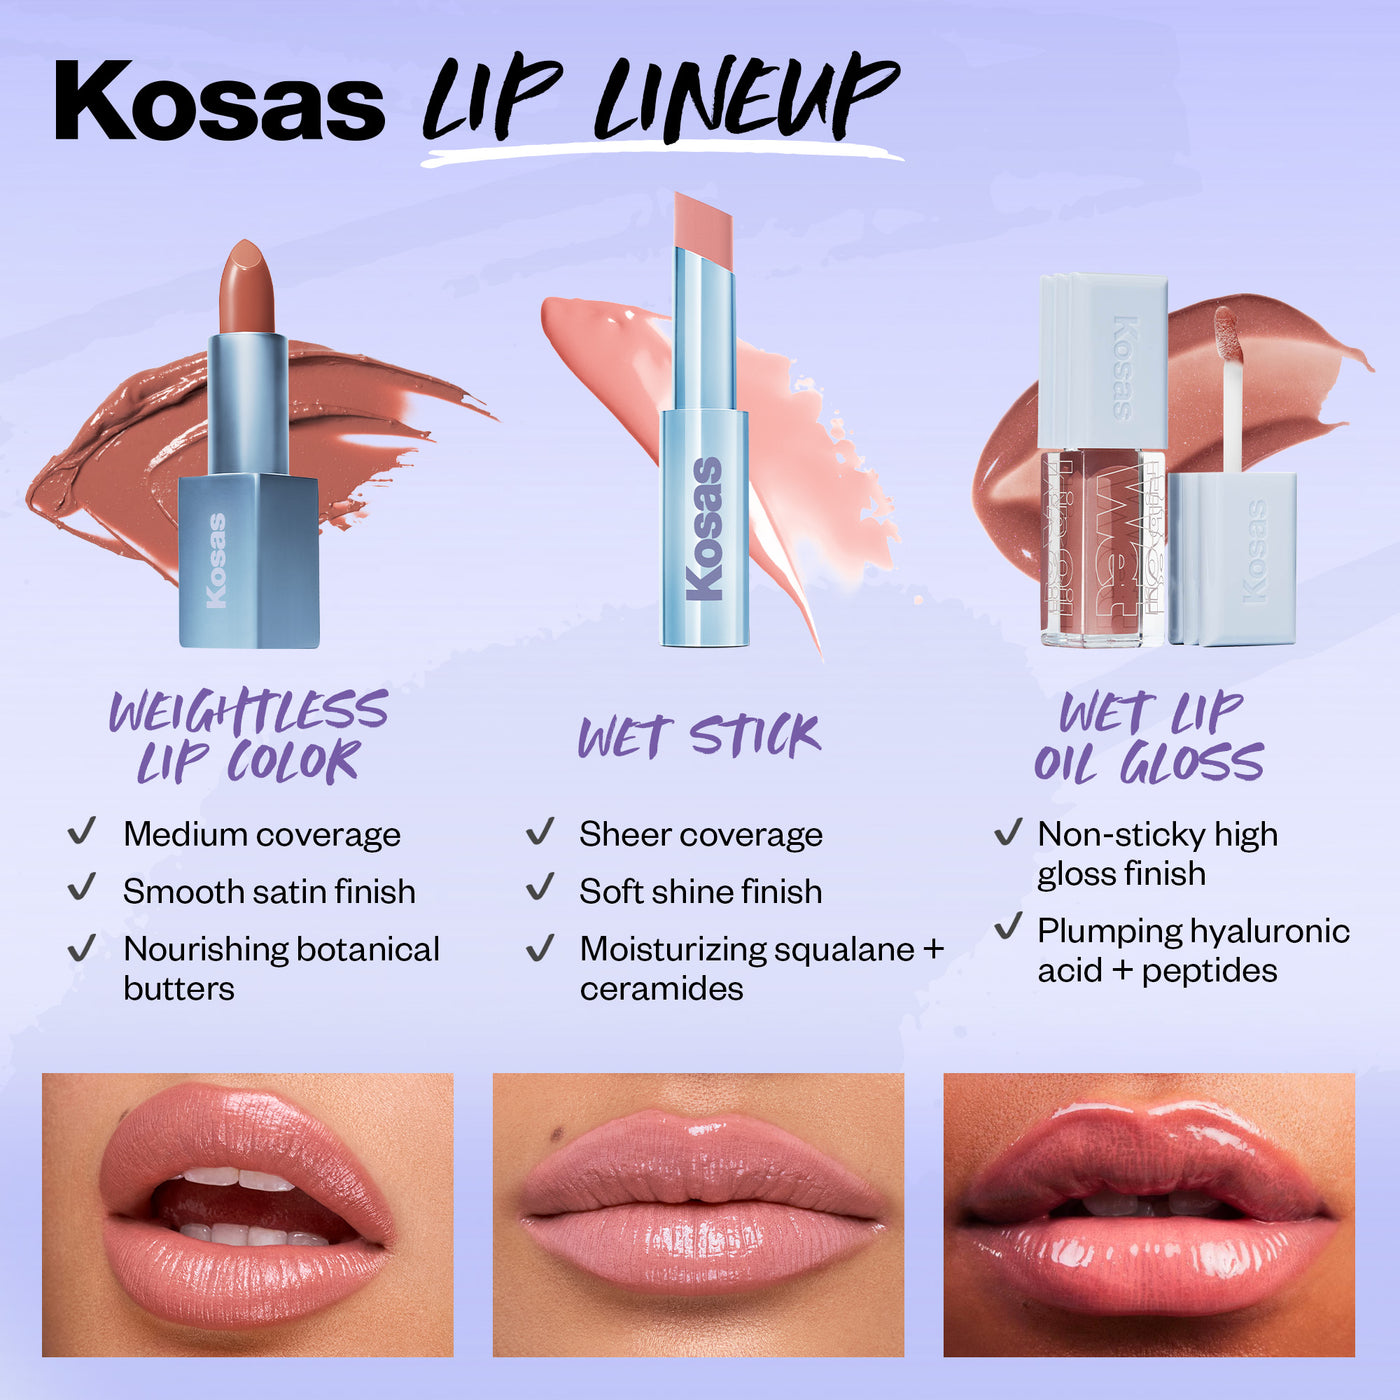 Kosas Weightless Lip Colour